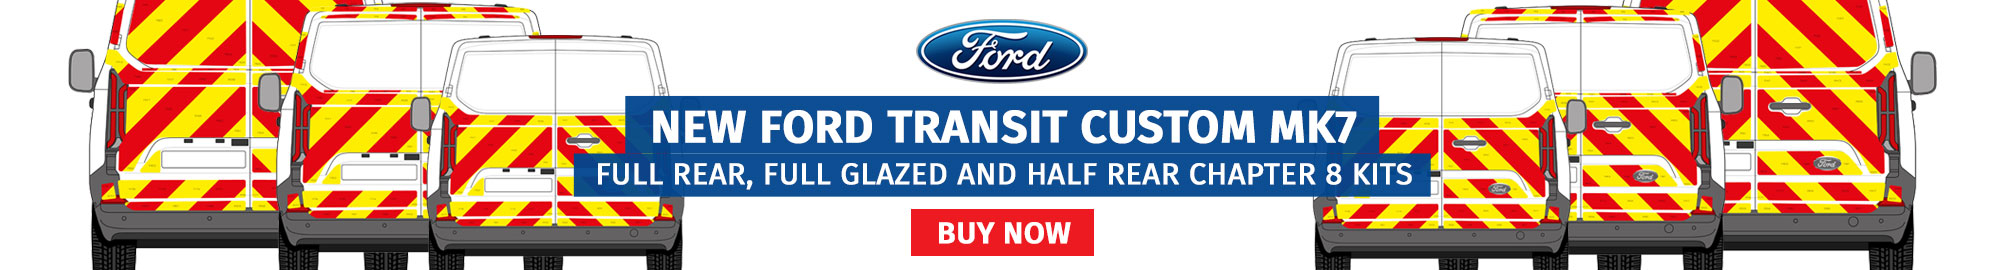 Victory Design - New Ford Transit Custom MK7 Kits